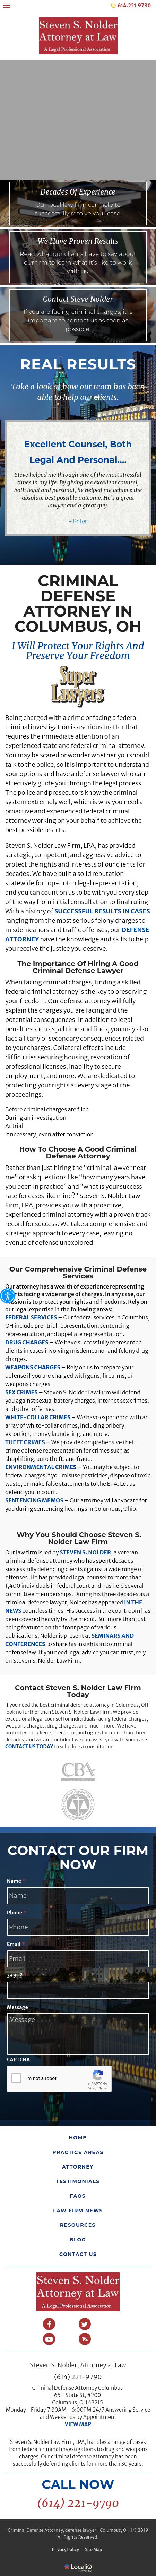 Scott & Nolder Law Firm - Columbus OH Lawyers